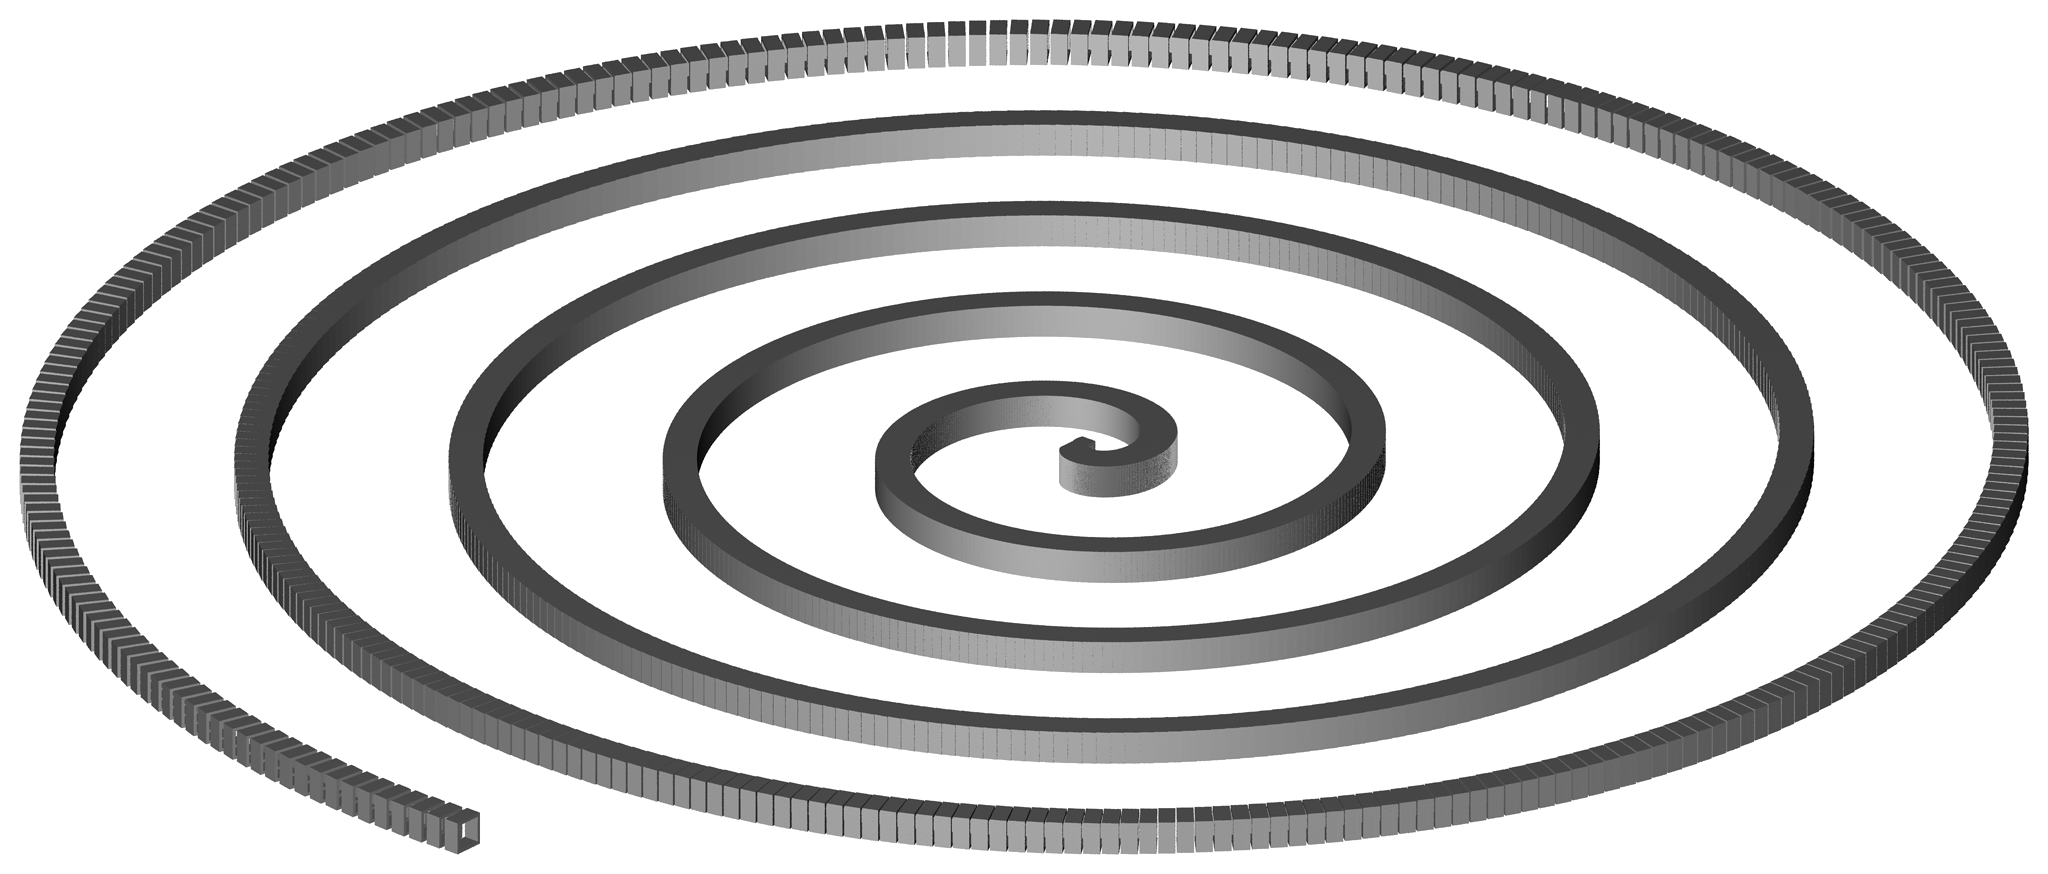 Spiral PNG Background Image